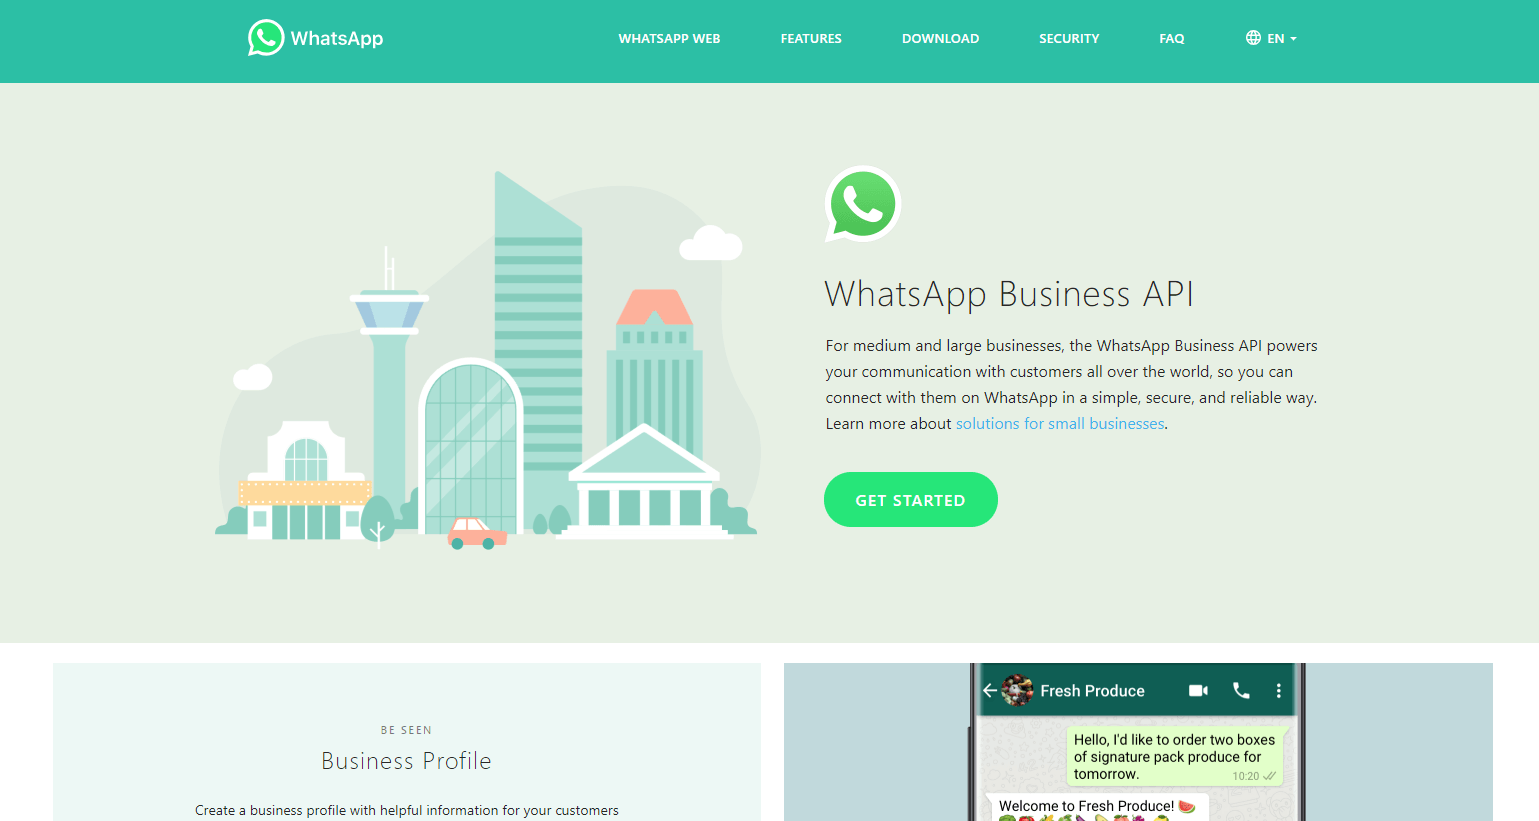 Official WhatsApp Business API